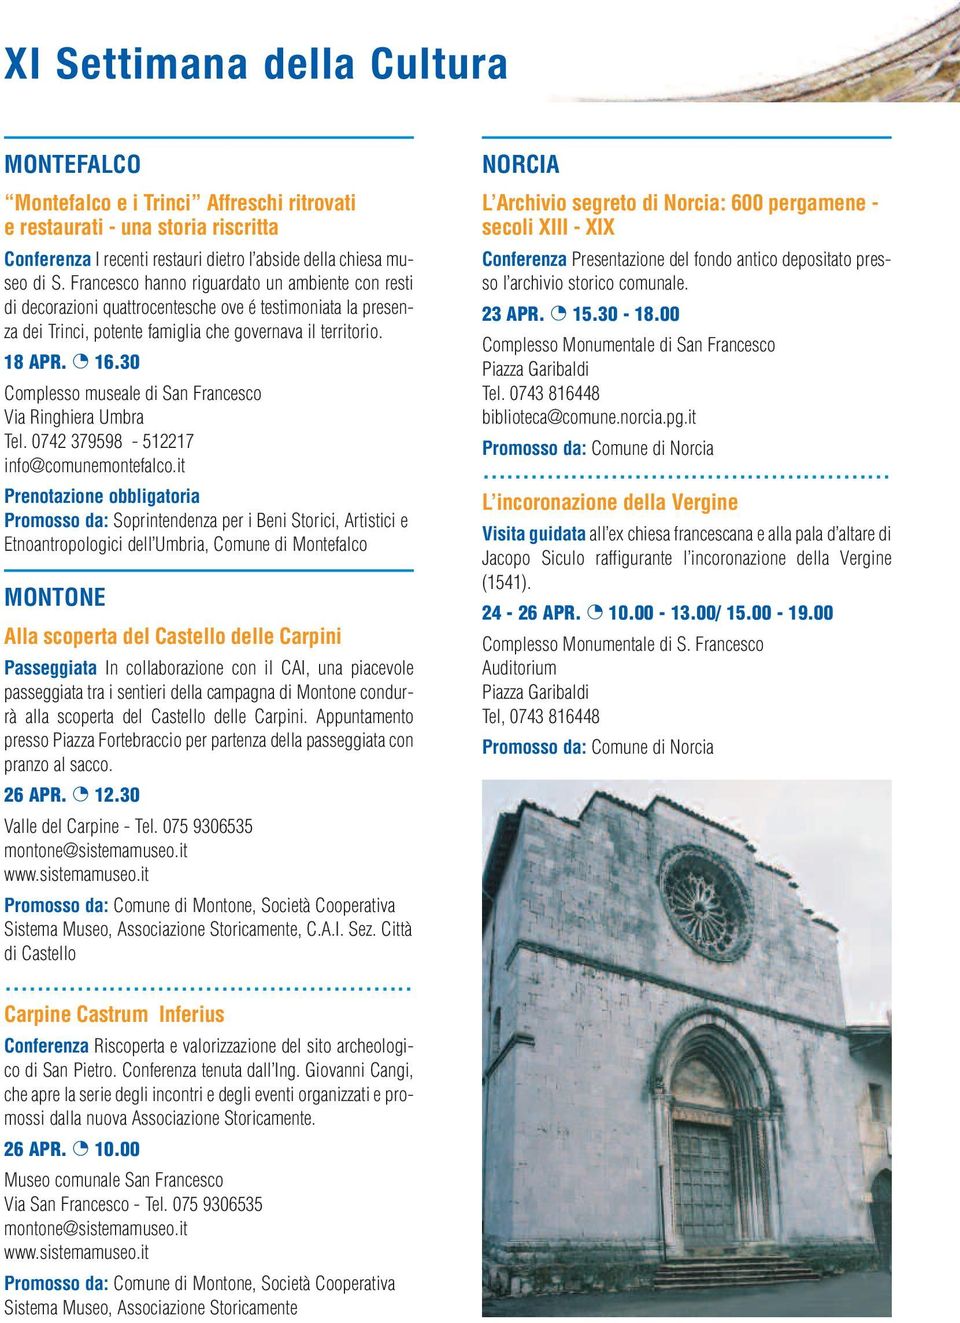 30 Complesso museale di San Francesco Via Ringhiera Umbra Tel. 0742 379598-512217 info@comunemontefalco.